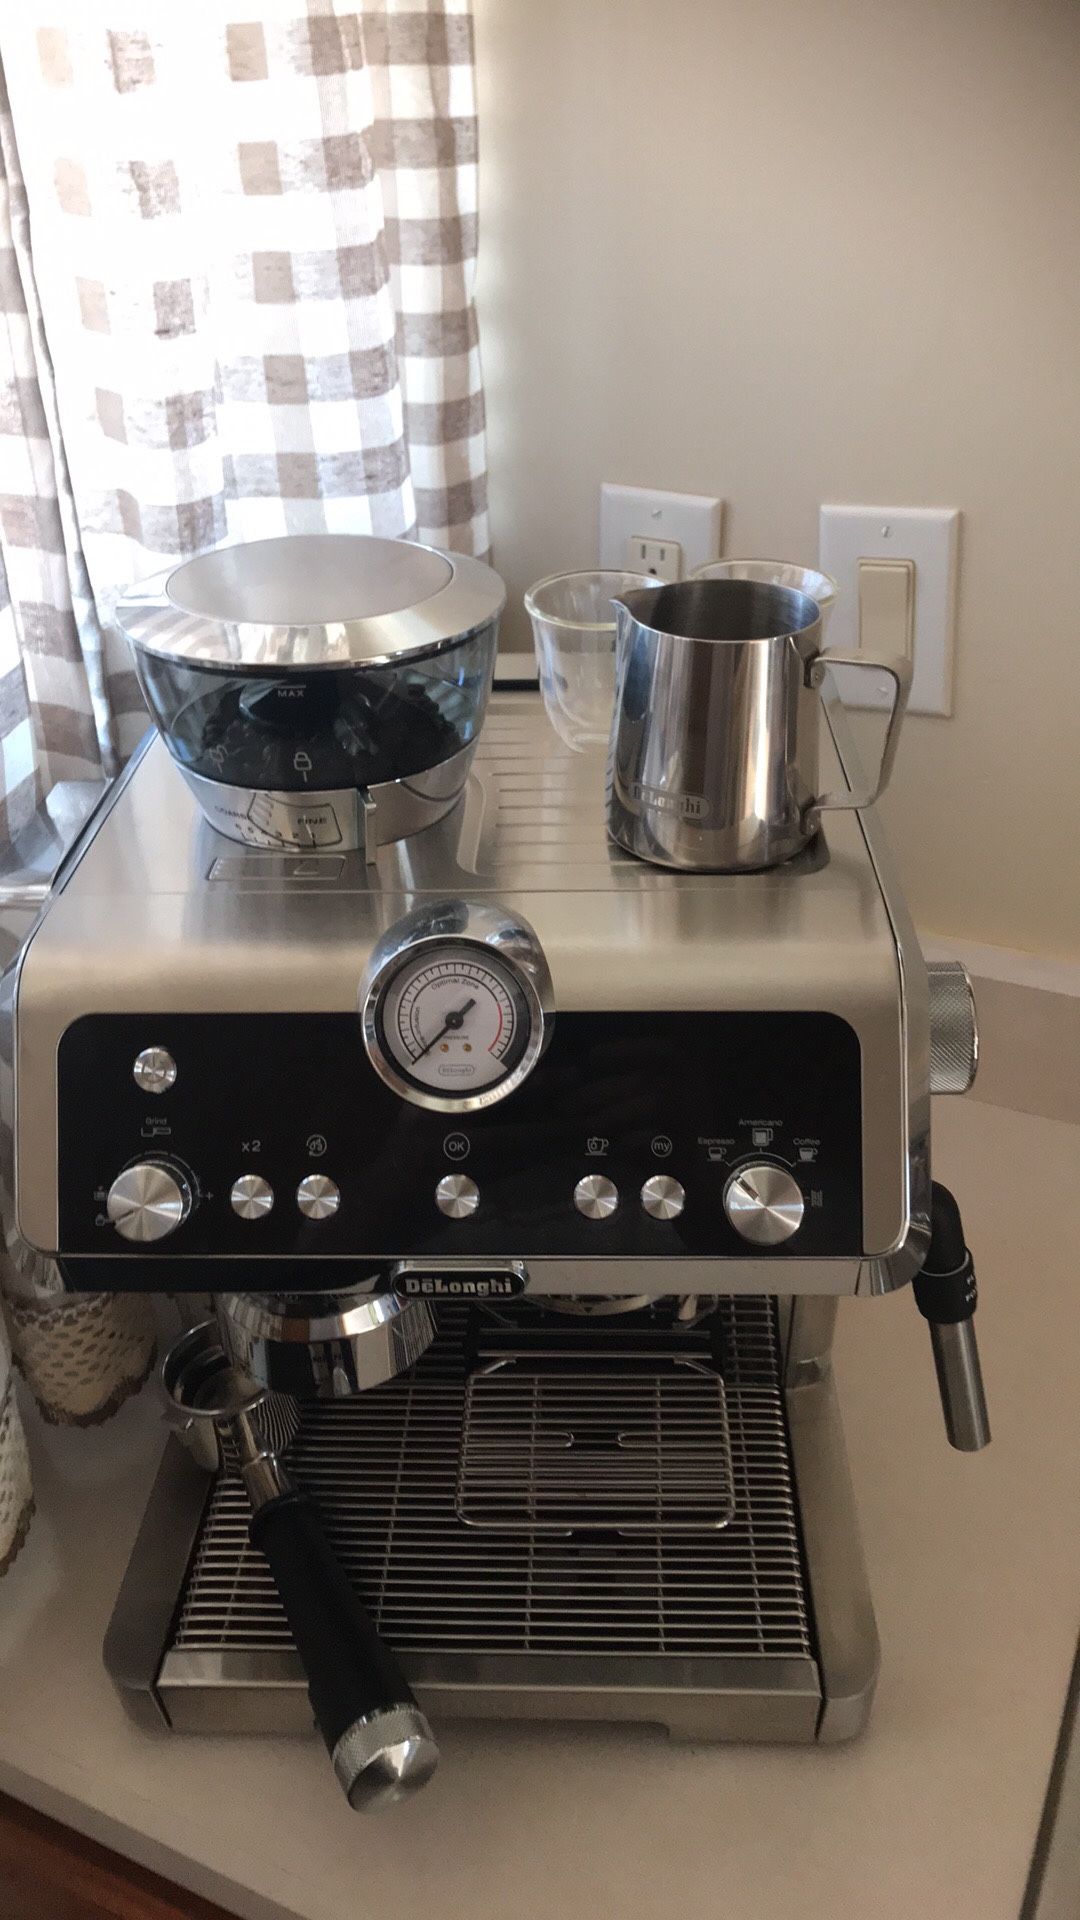 DeLonghi Espresso machine with milk frother/Steamer